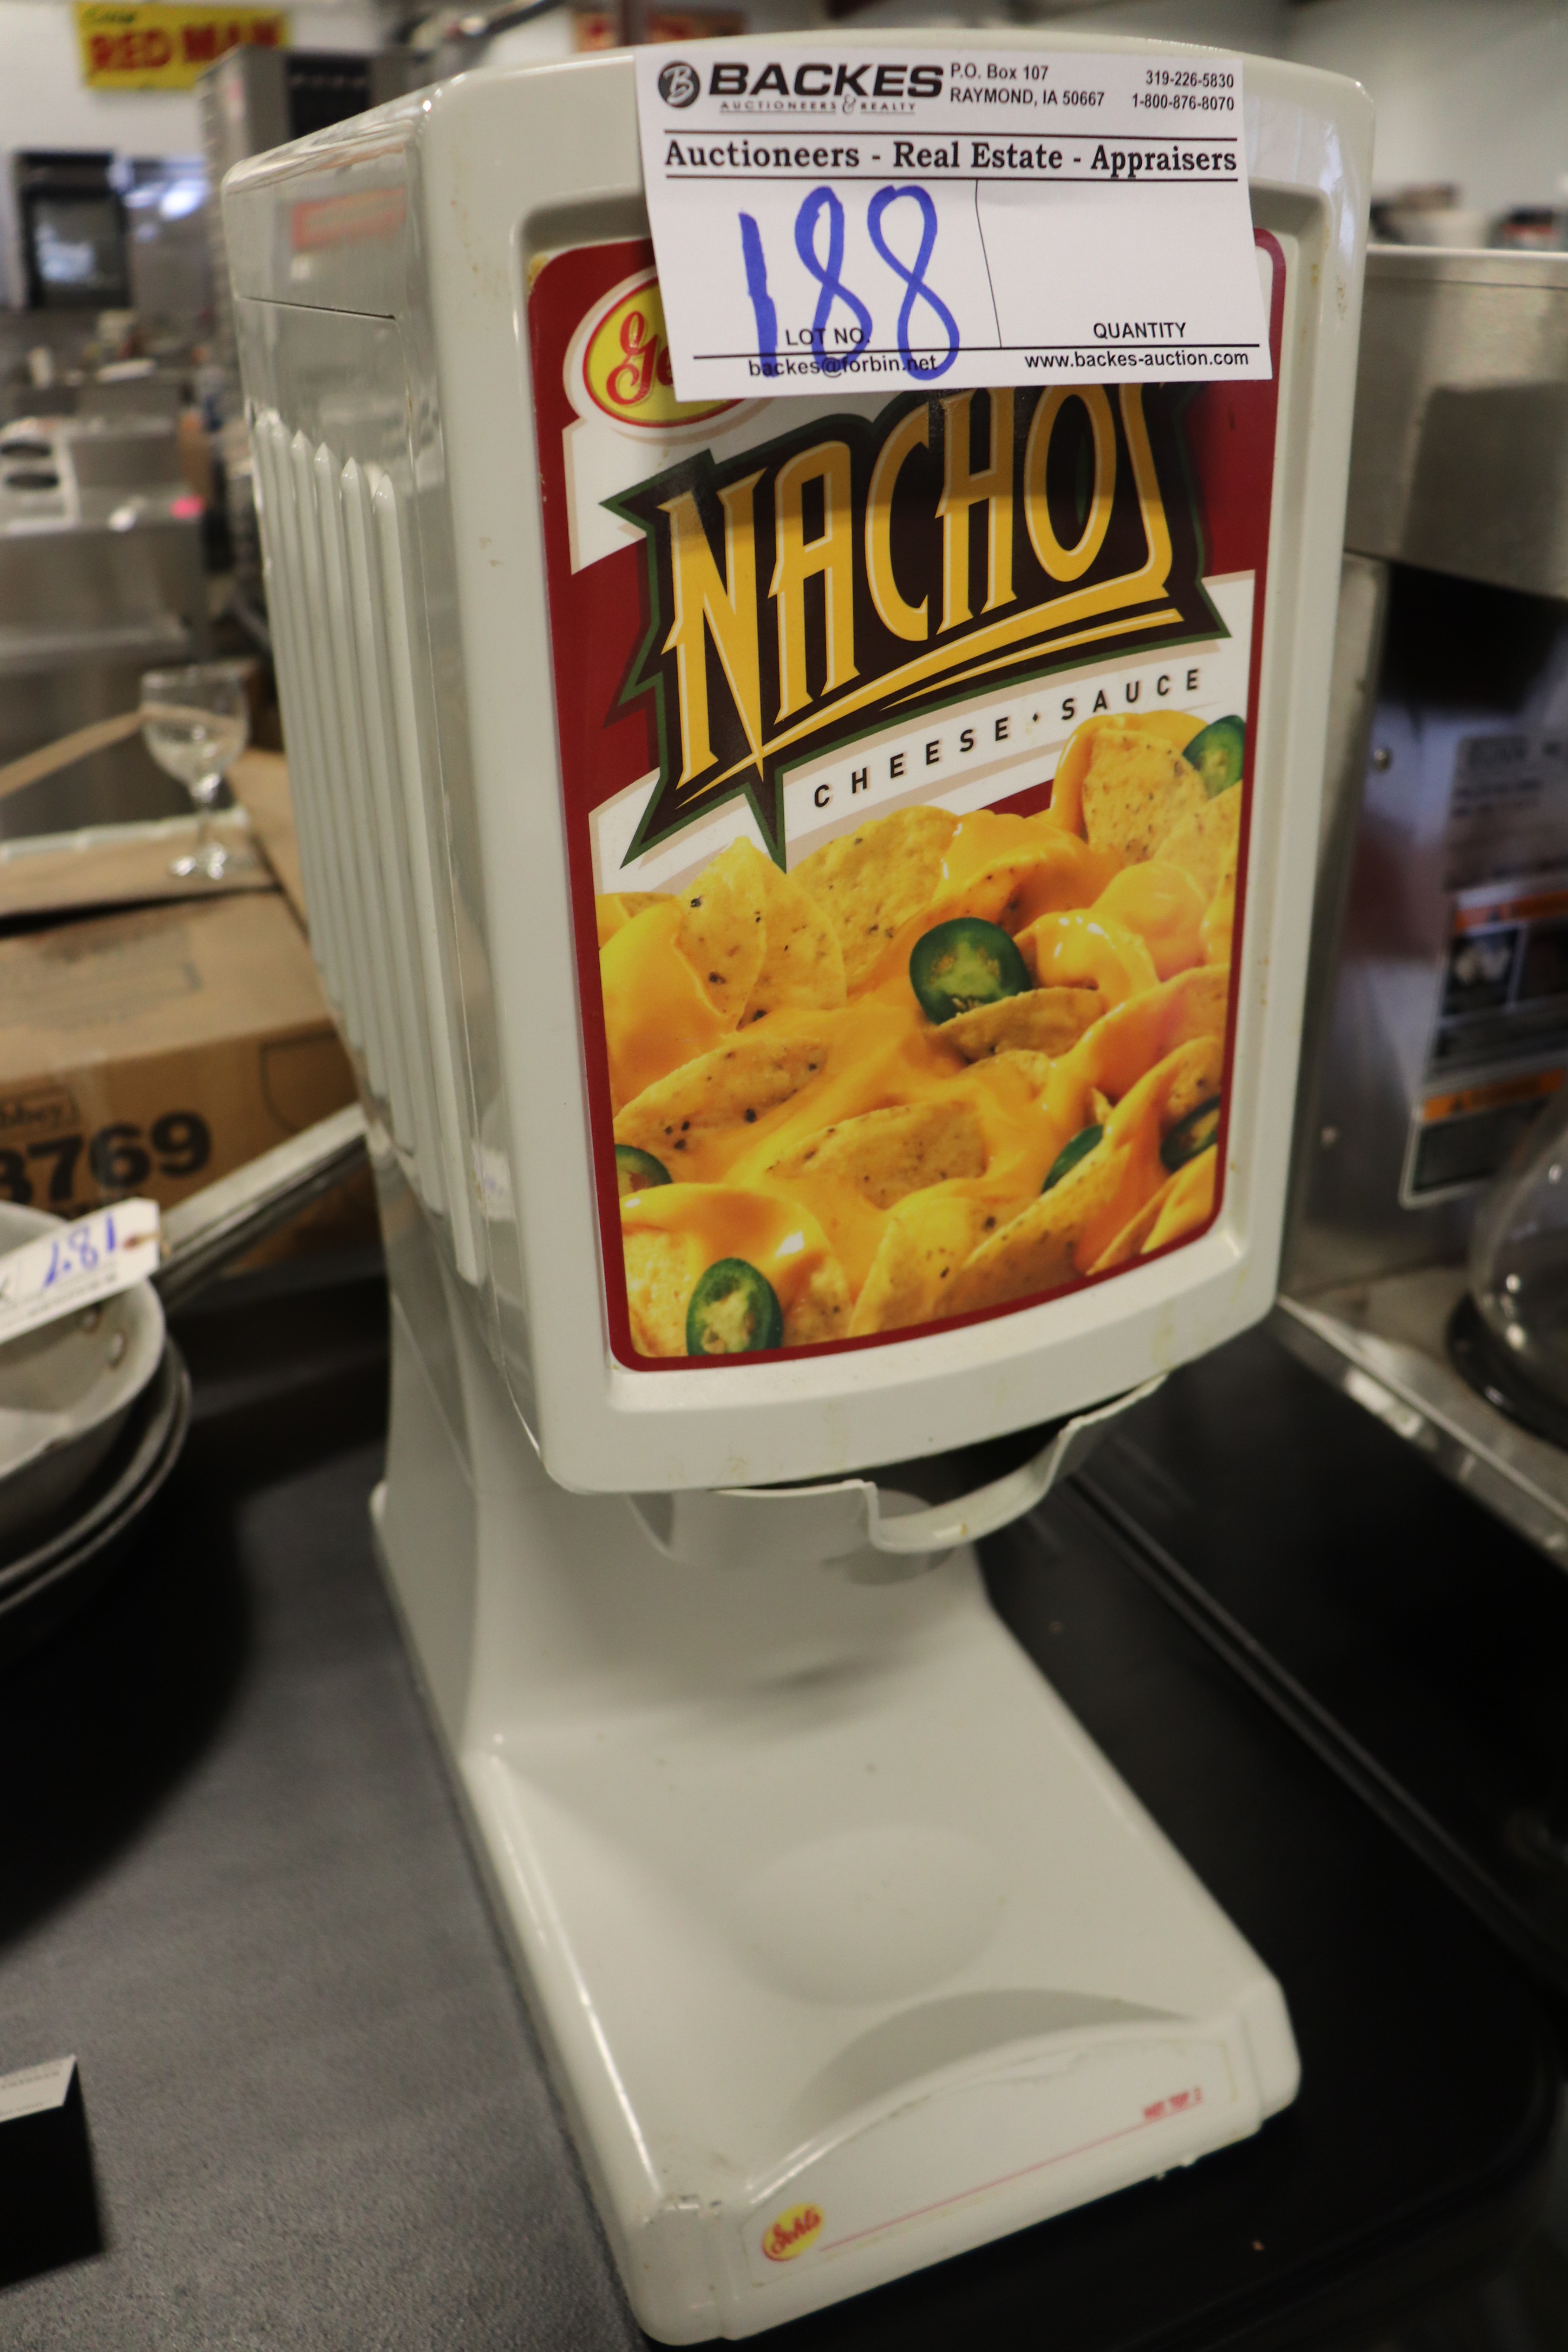 Nacho Cheese Dispenser